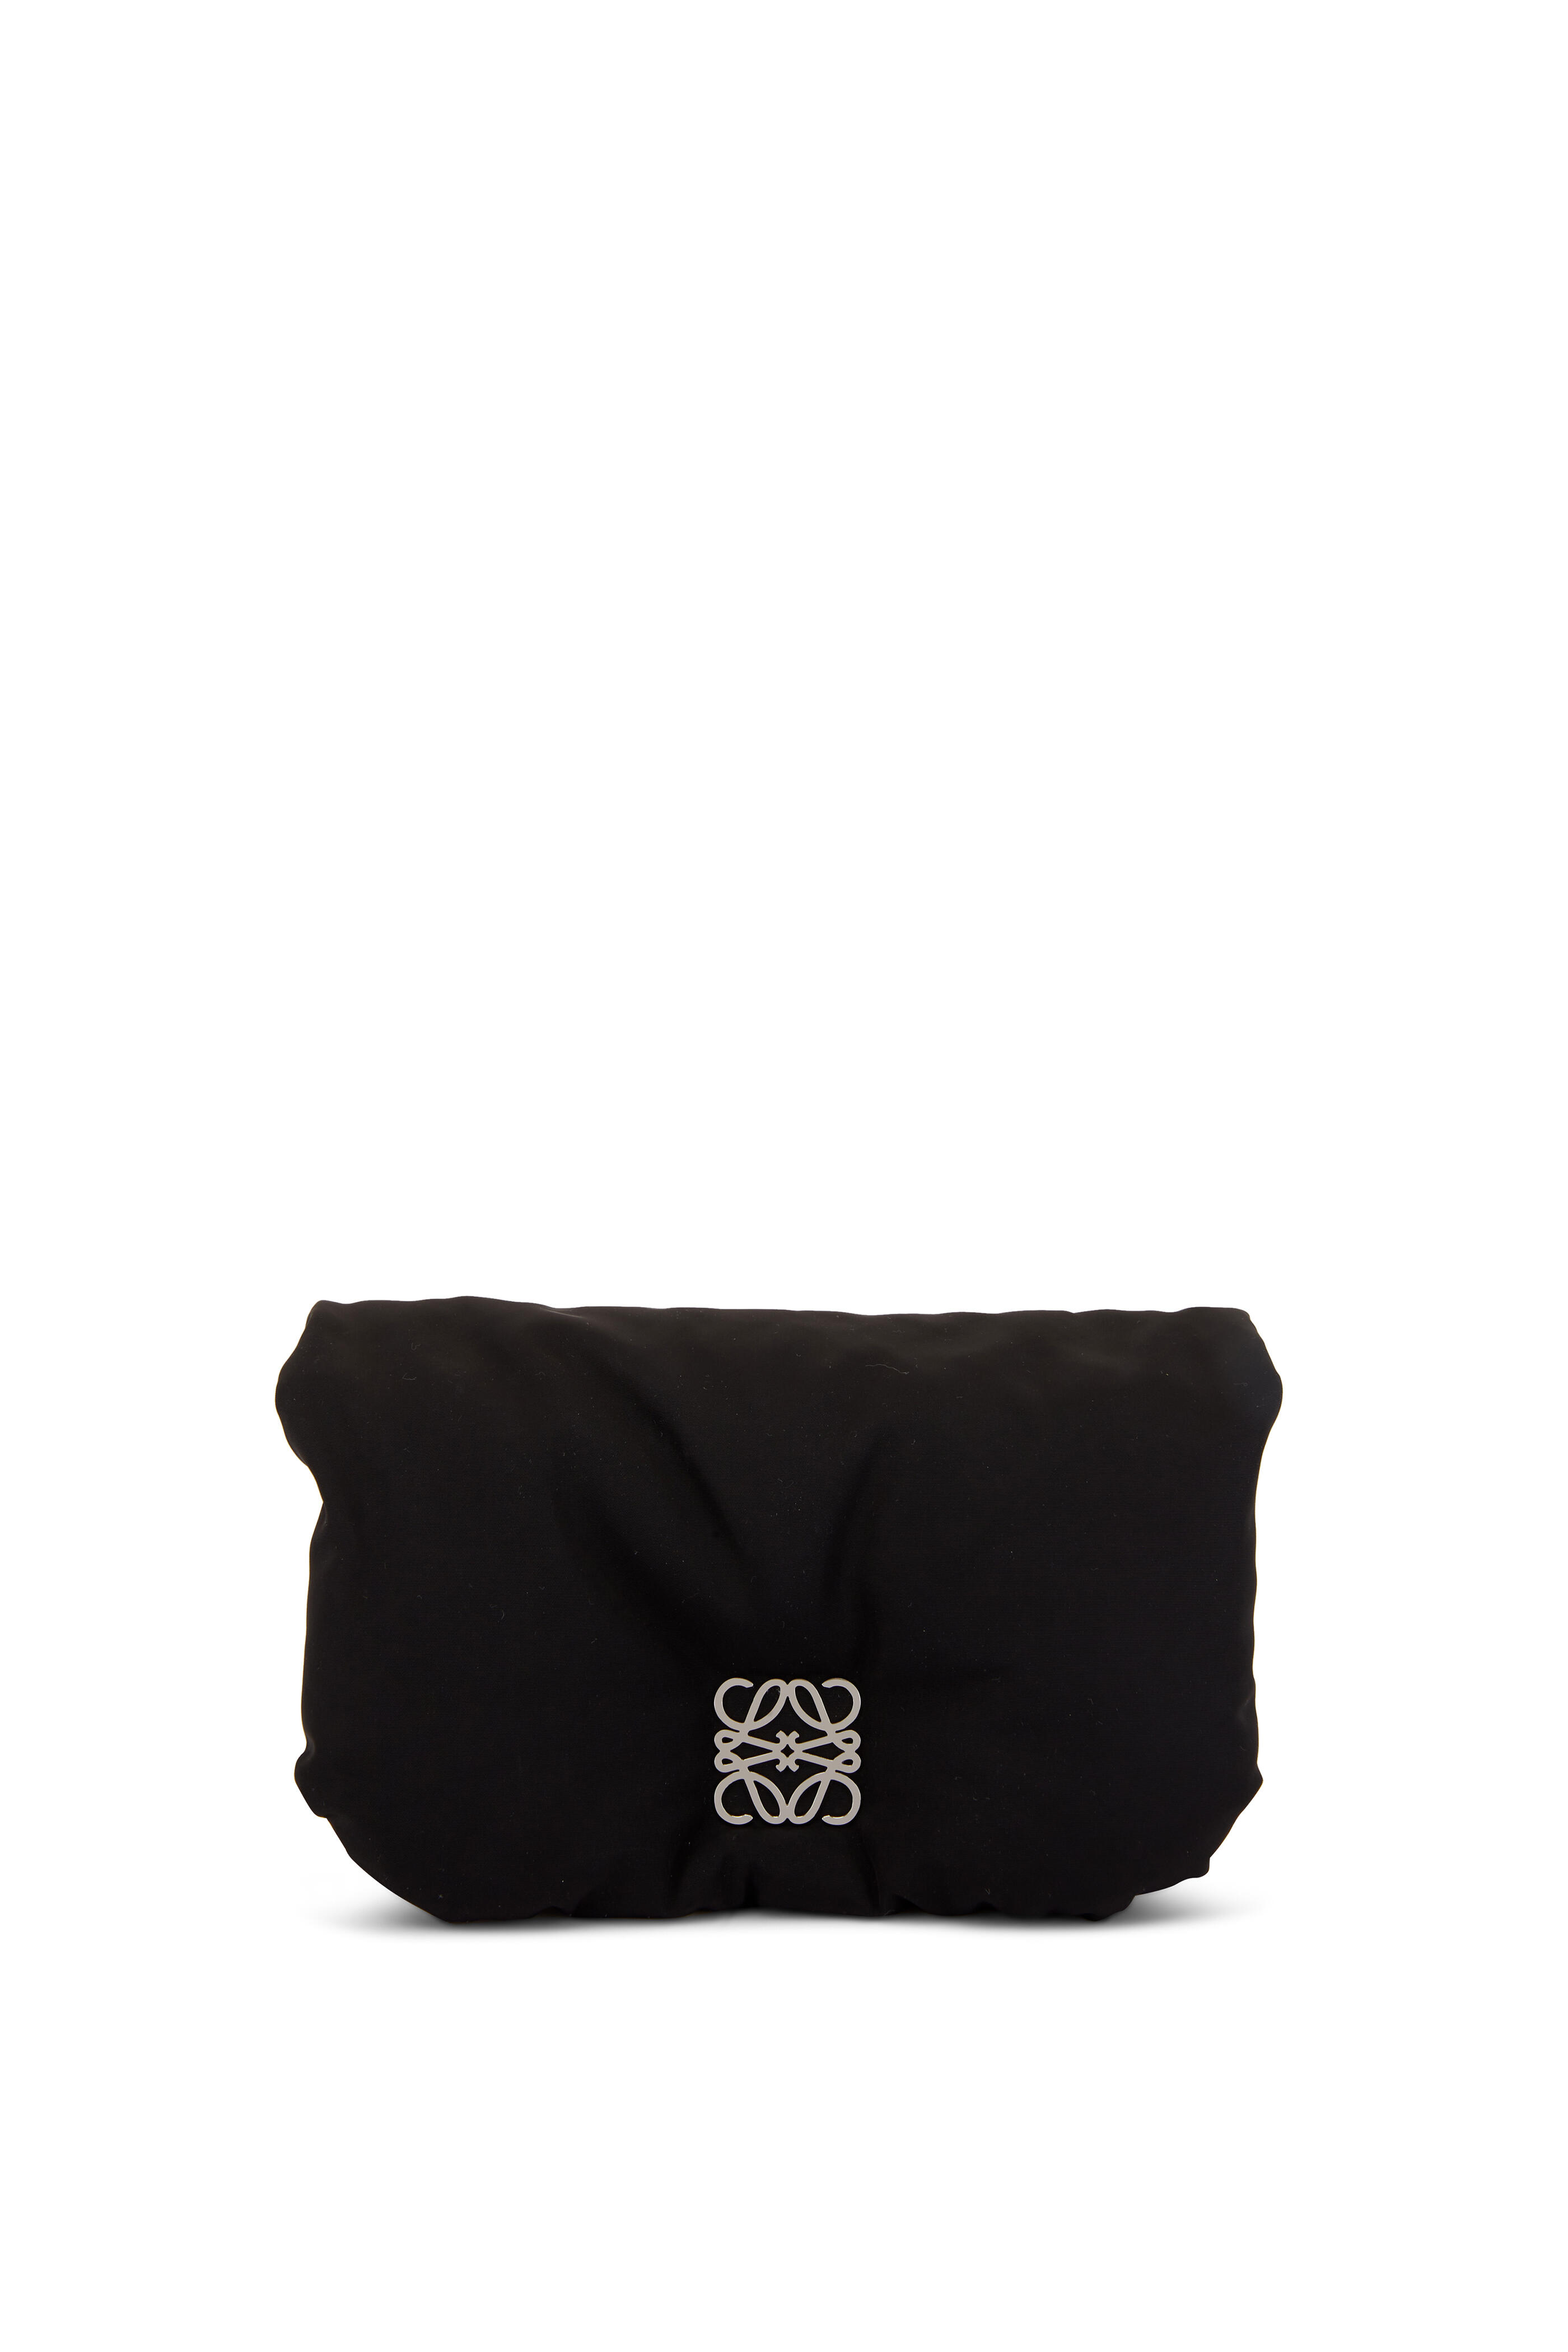 Loewe Men's Goya Thin Briefcase in Black 337.62.P57.1100 2002015356125 -  Handbags - Jomashop